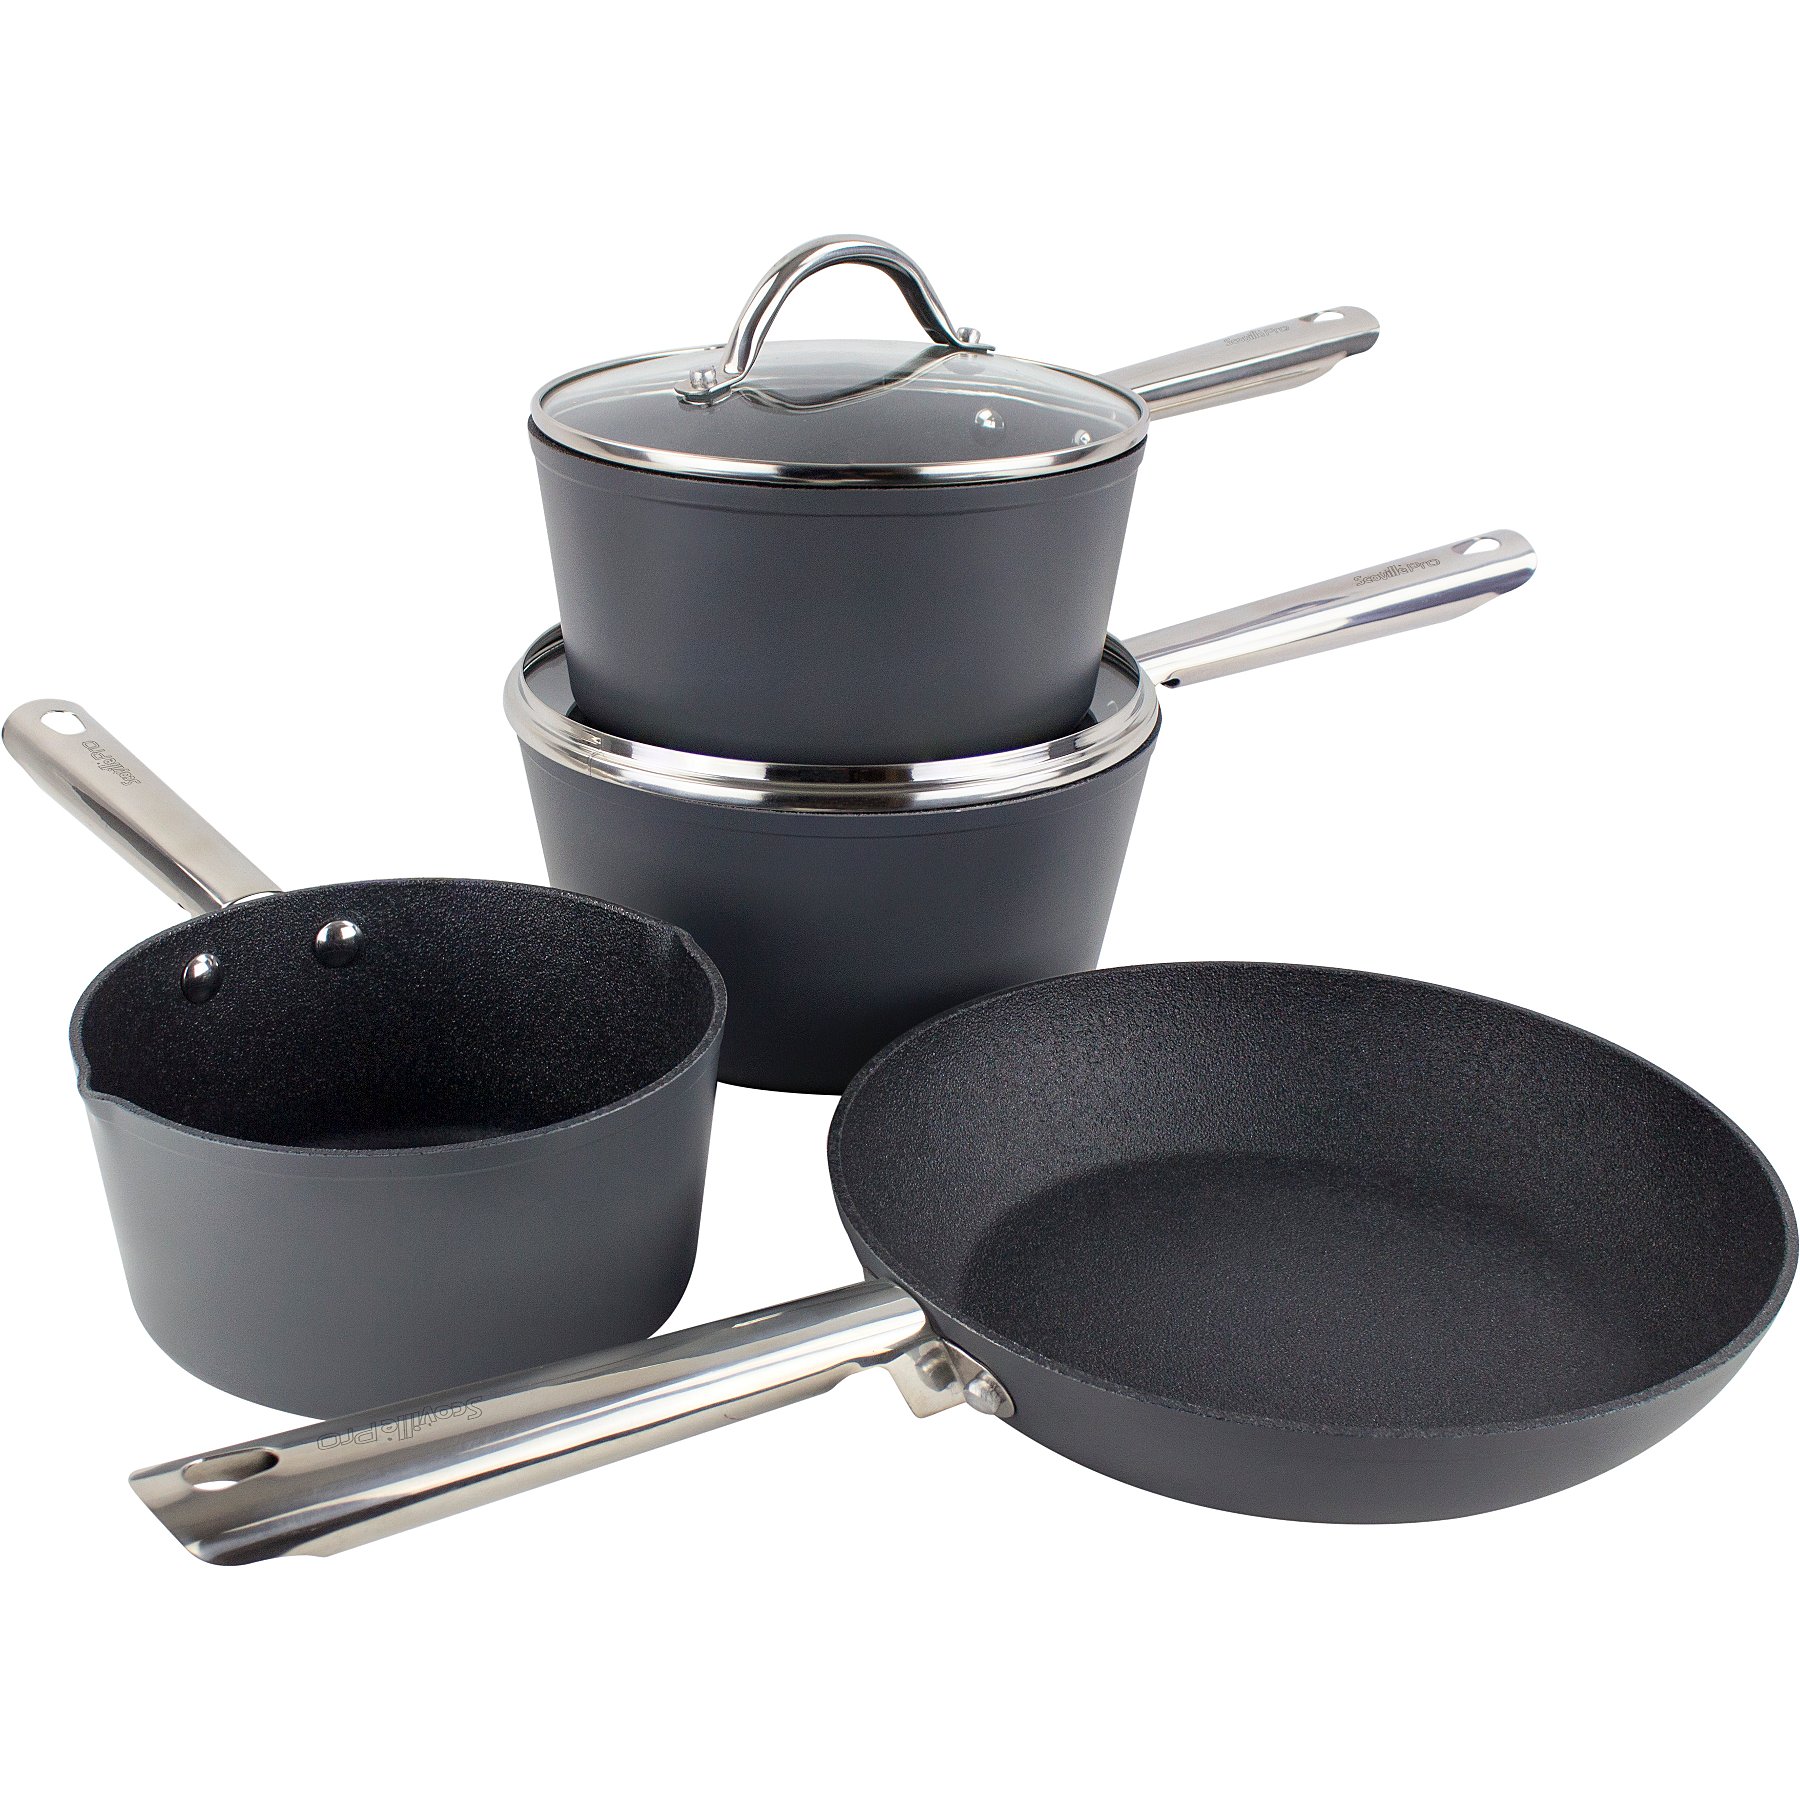 Scoville Never-stick Cookware Set 5 Piece 3 sauce pans 2 fry pans and 2 lids 